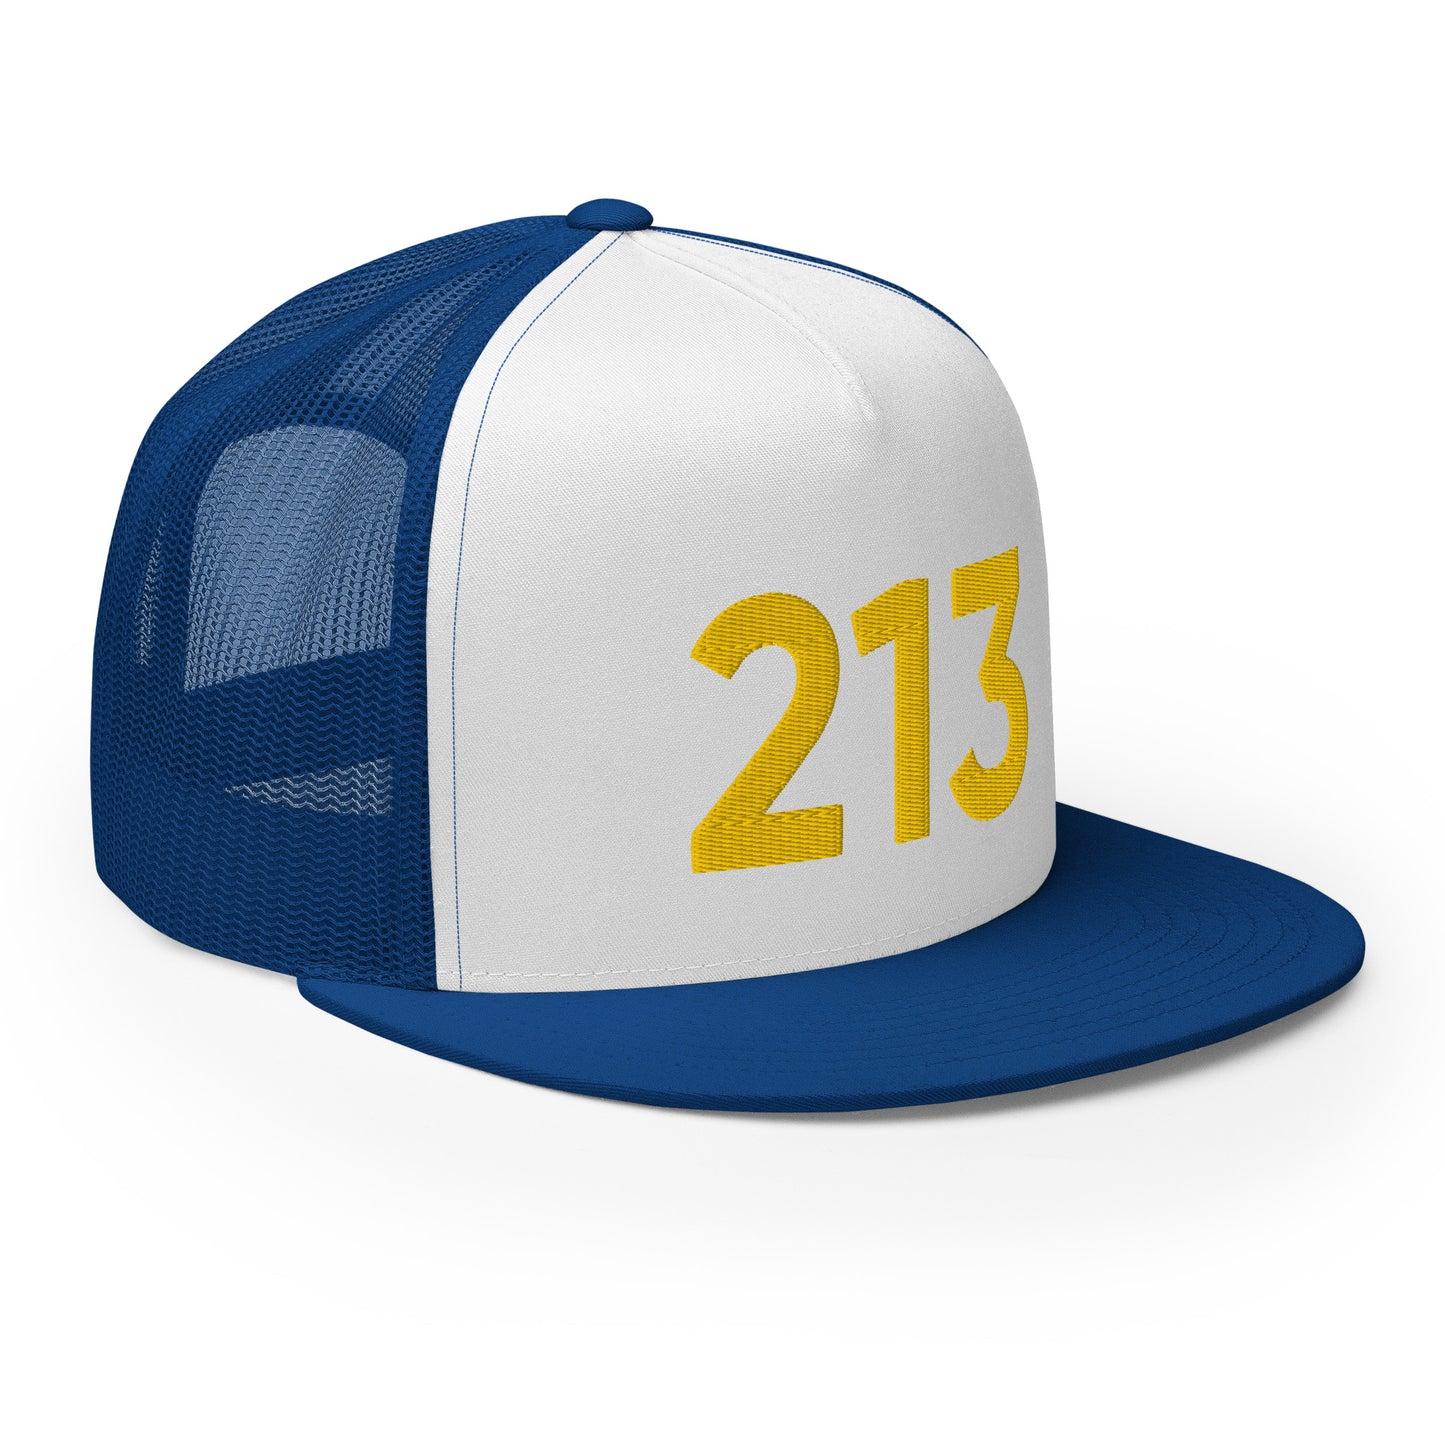 213 LAR Trucker Hat